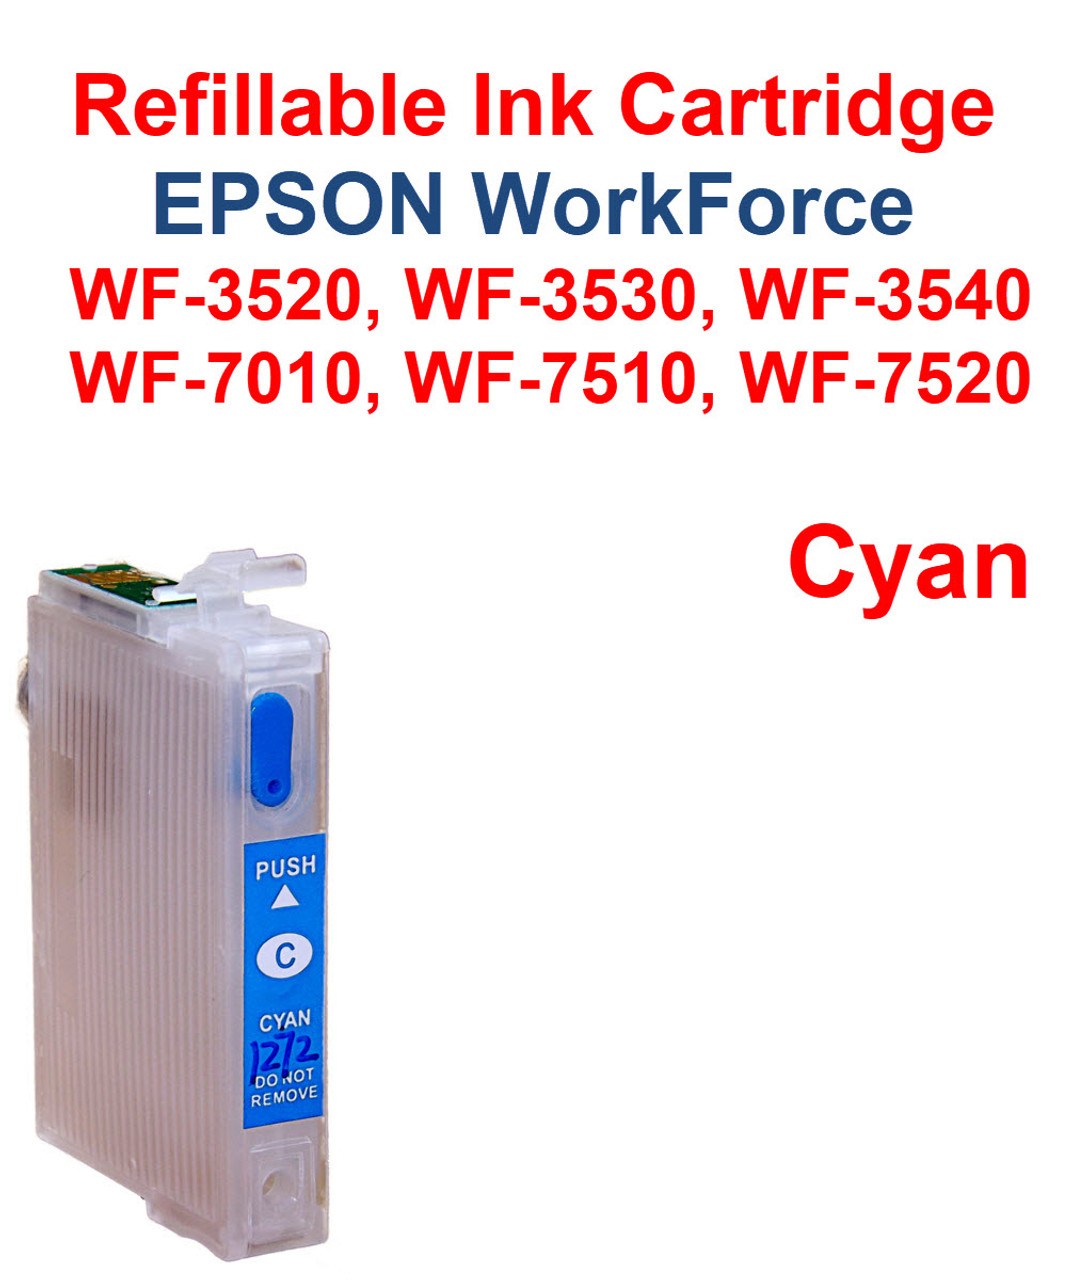 Cyan Refillable Cartridge Epson WorkForce WF-3530,  WF-3540, WF-7010, WF-7510, WF-7520 printers